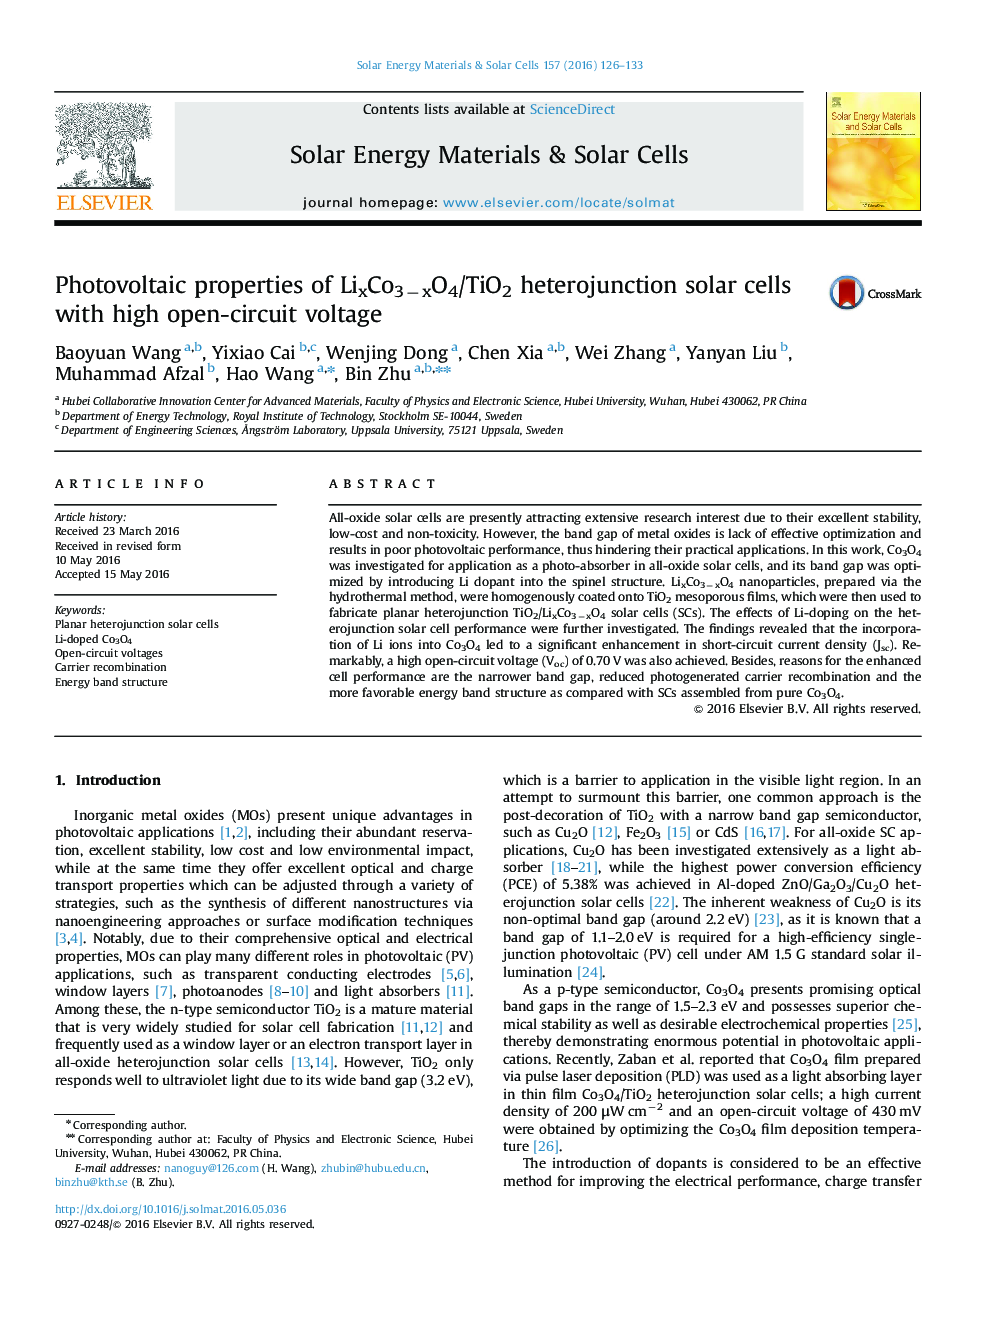 Photovoltaic properties of LixCo3âxO4/TiO2 heterojunction solar cells with high open-circuit voltage